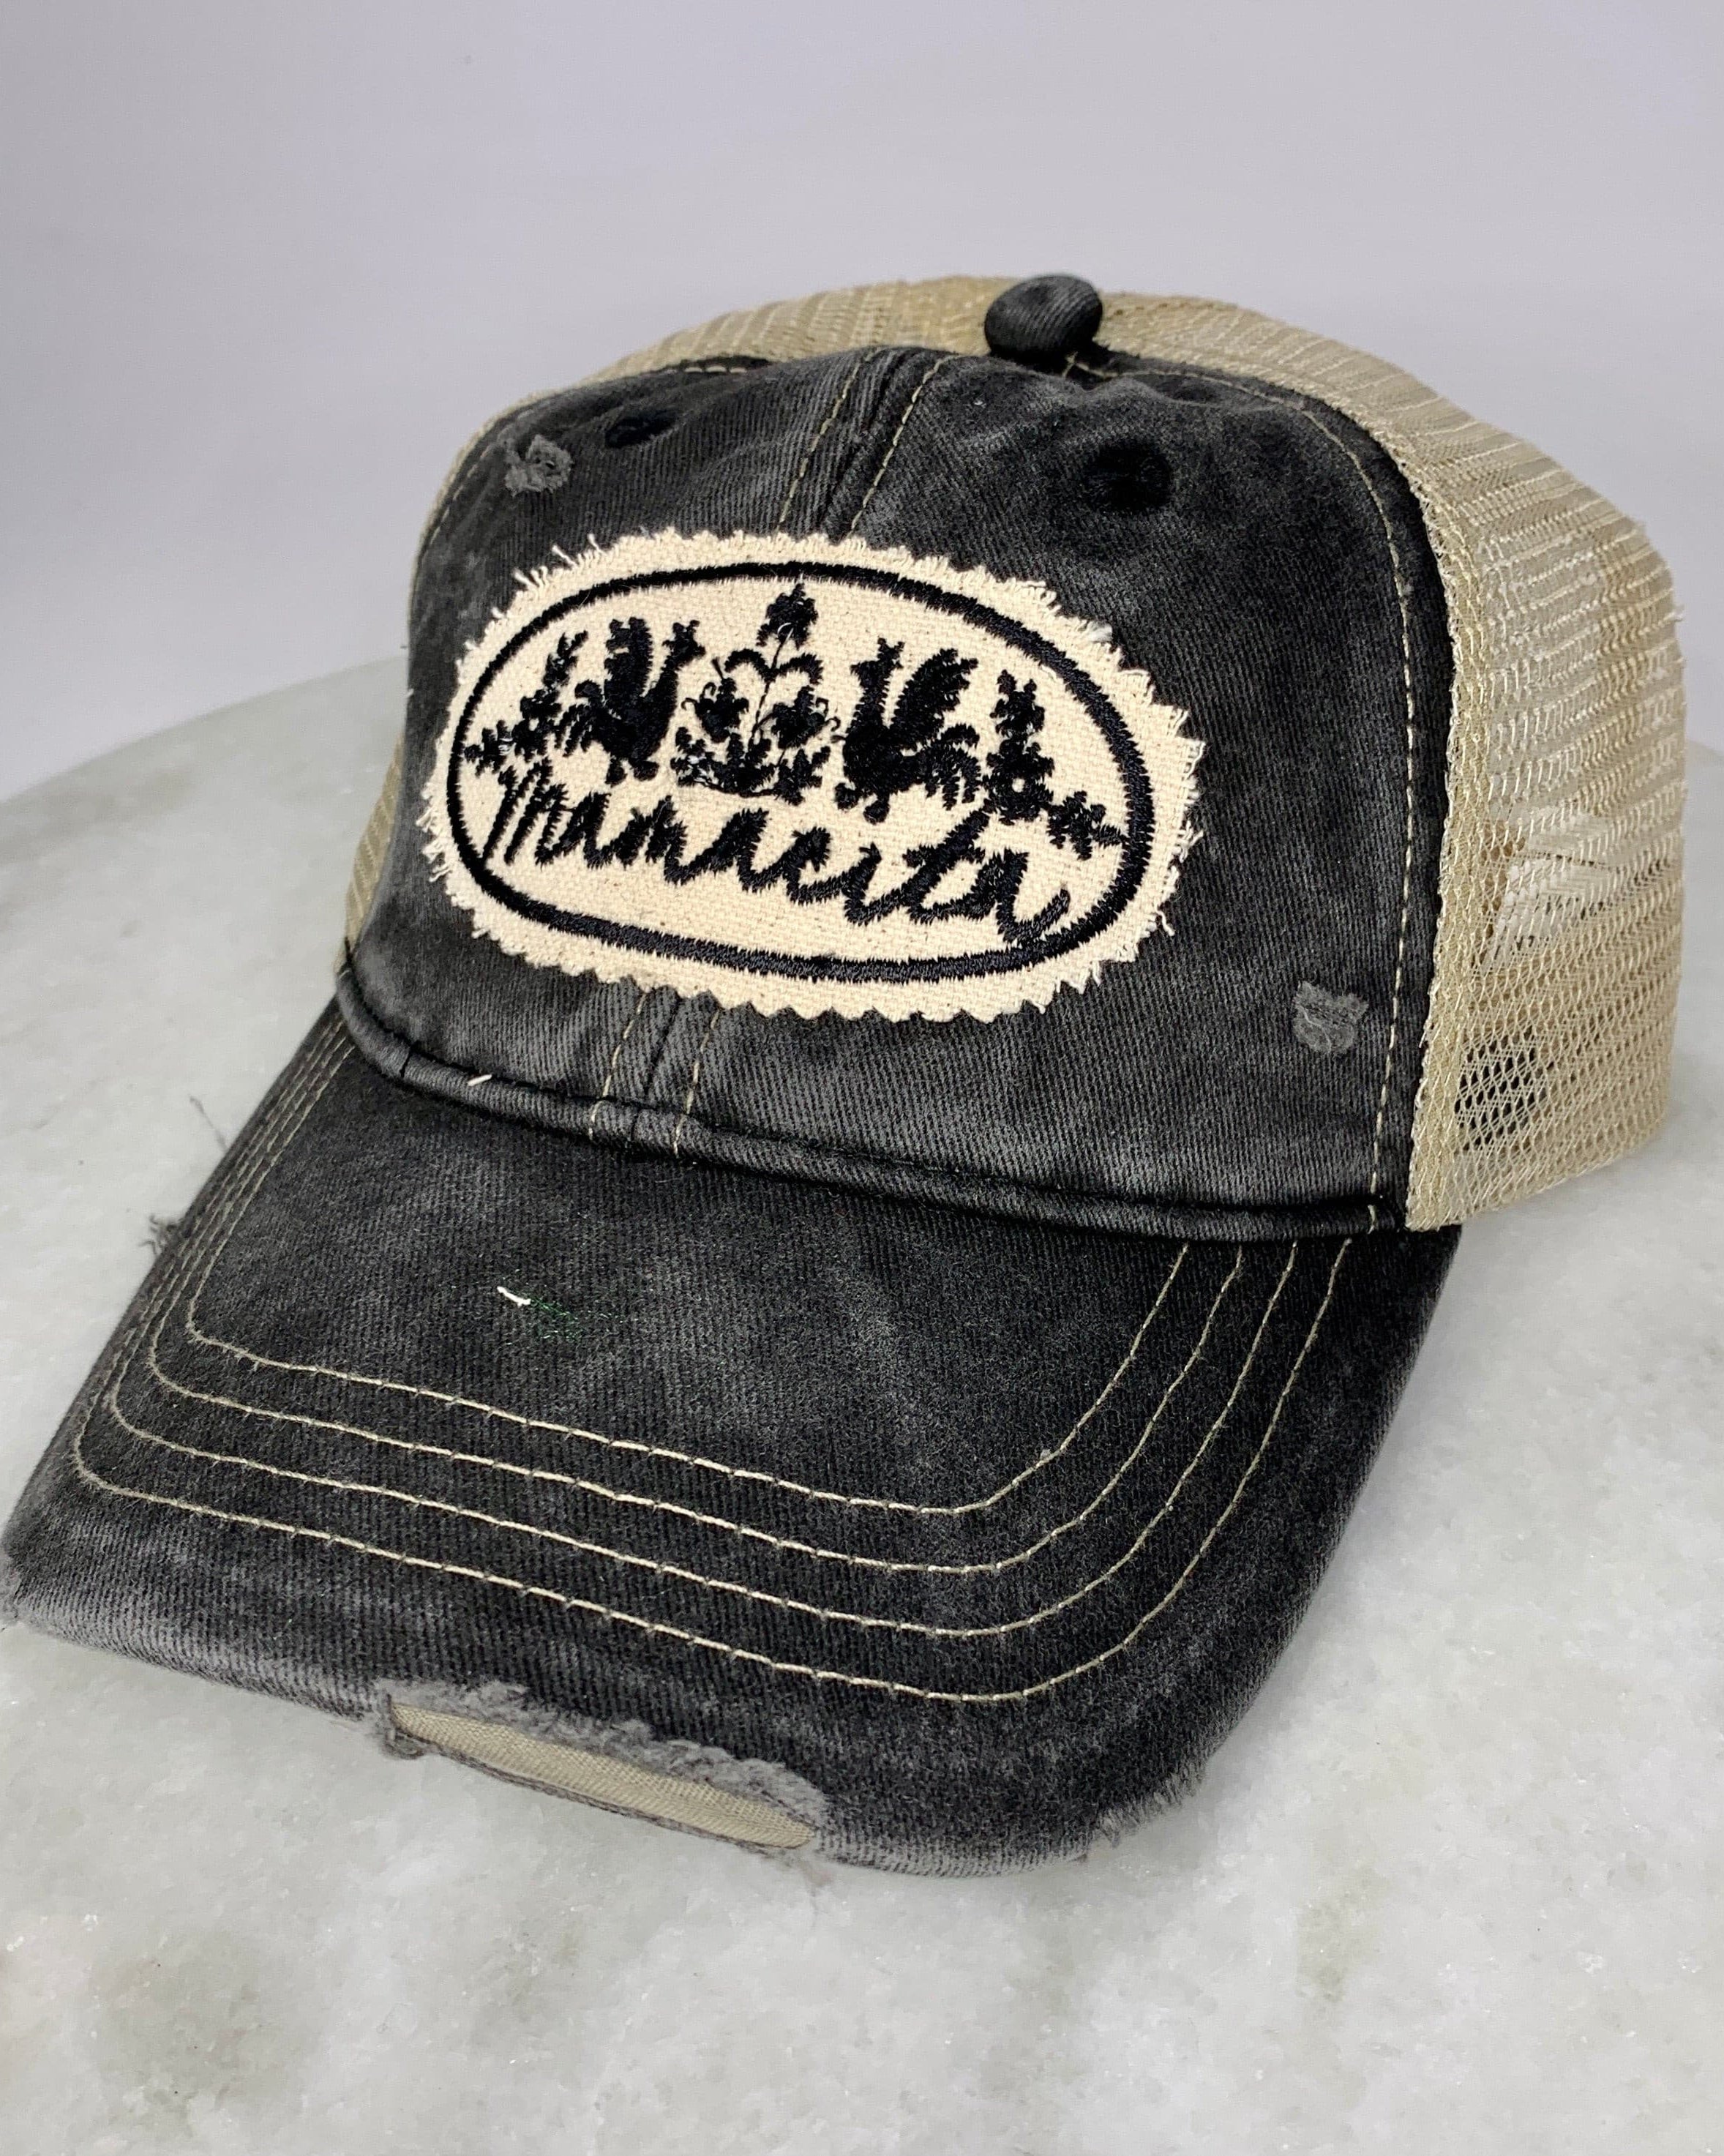 Assorted Mamacita Trucker Hats.